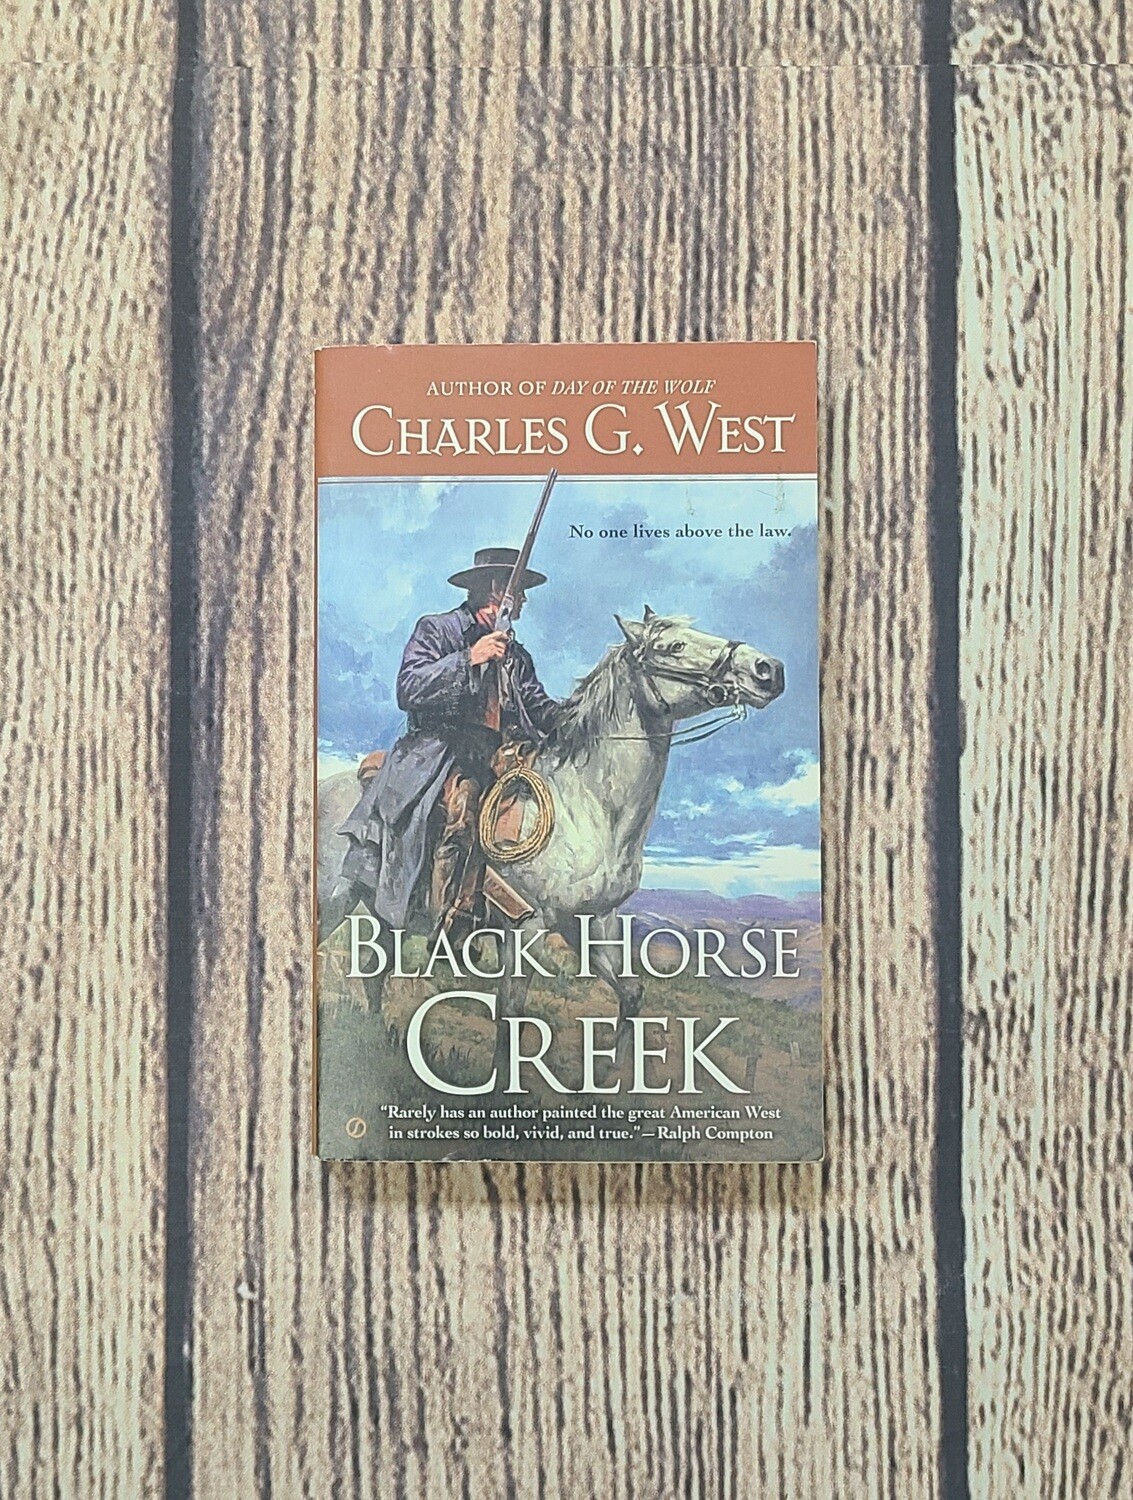 Black Horse Creek by Charles G. West